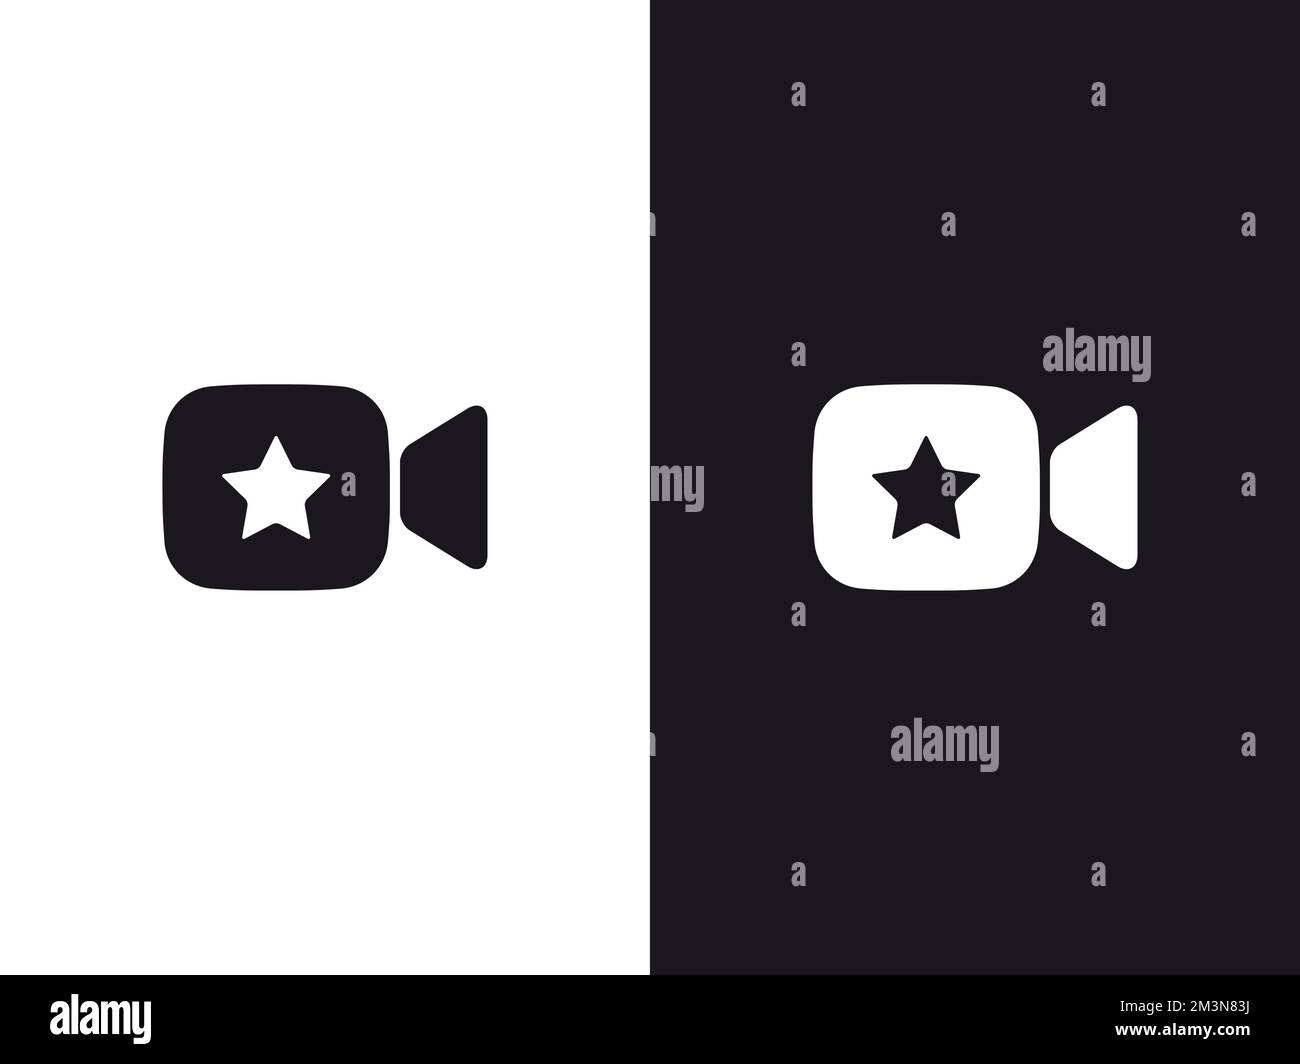 Favorite Video icon. Bookmark favorite video icon. Camera sign with star. Videomark symbol concept. VideoStar app logo concept. Vector illustration Stock Vector